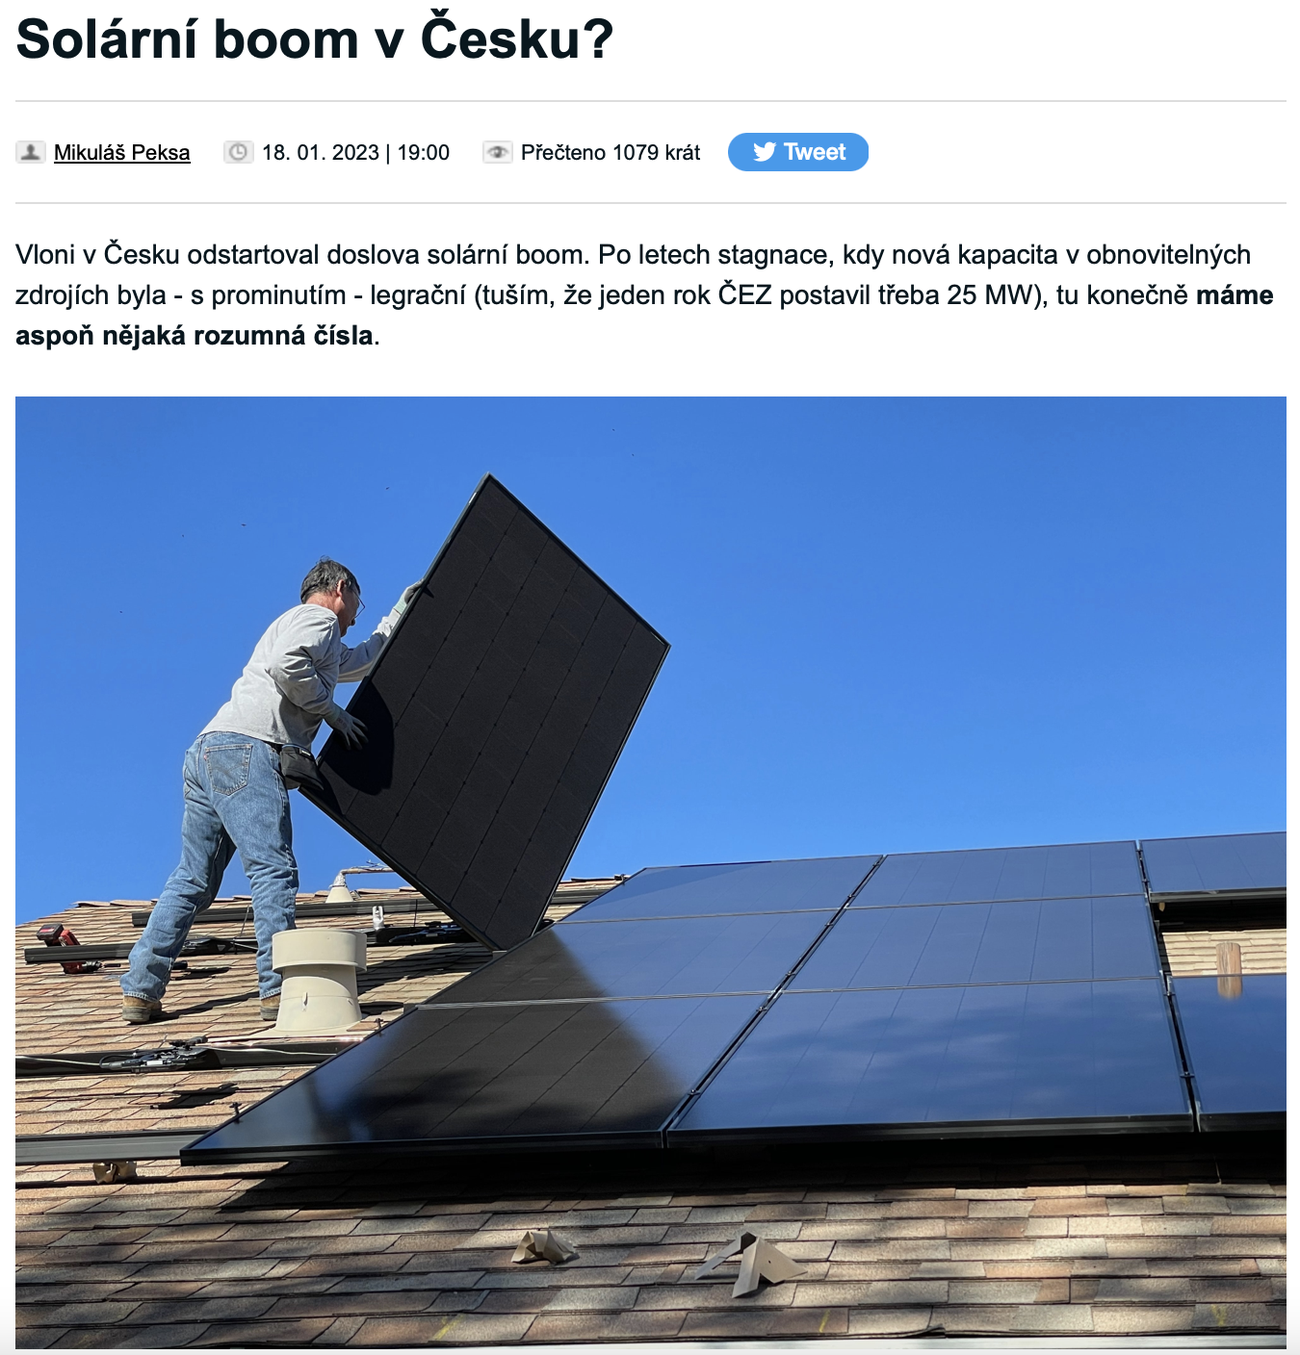 Solární boom